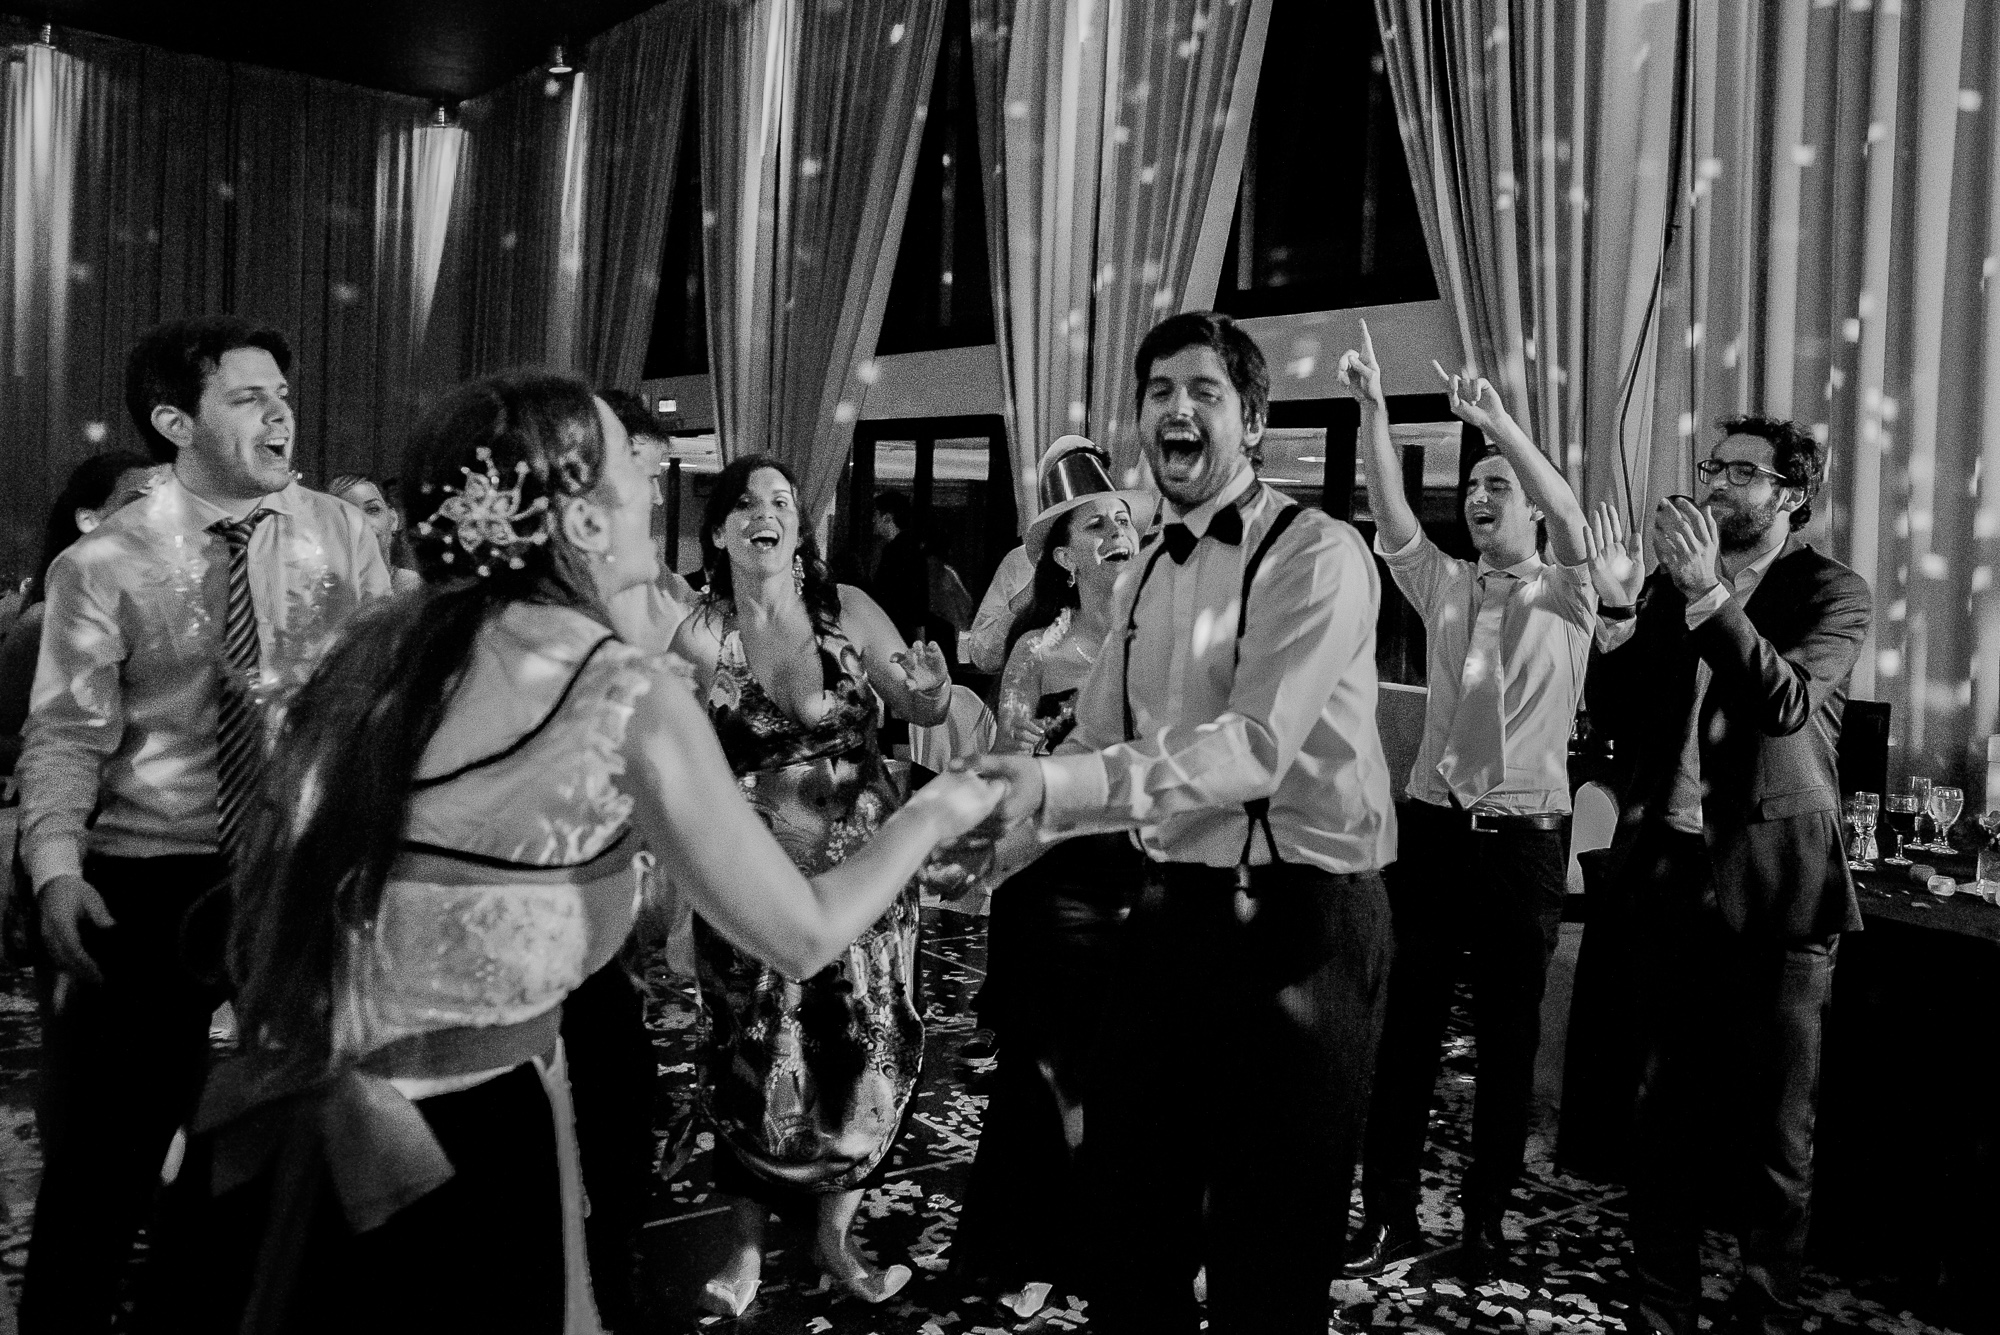 Gustavo Campos, Fotografo de bodas, Punto Bahia, fotografo casamiento buenos aires, fotoperiodismo de bodas, argentine wedding photography, gustavocampos.net, fotorreportaje de boda, Destination wedding photography